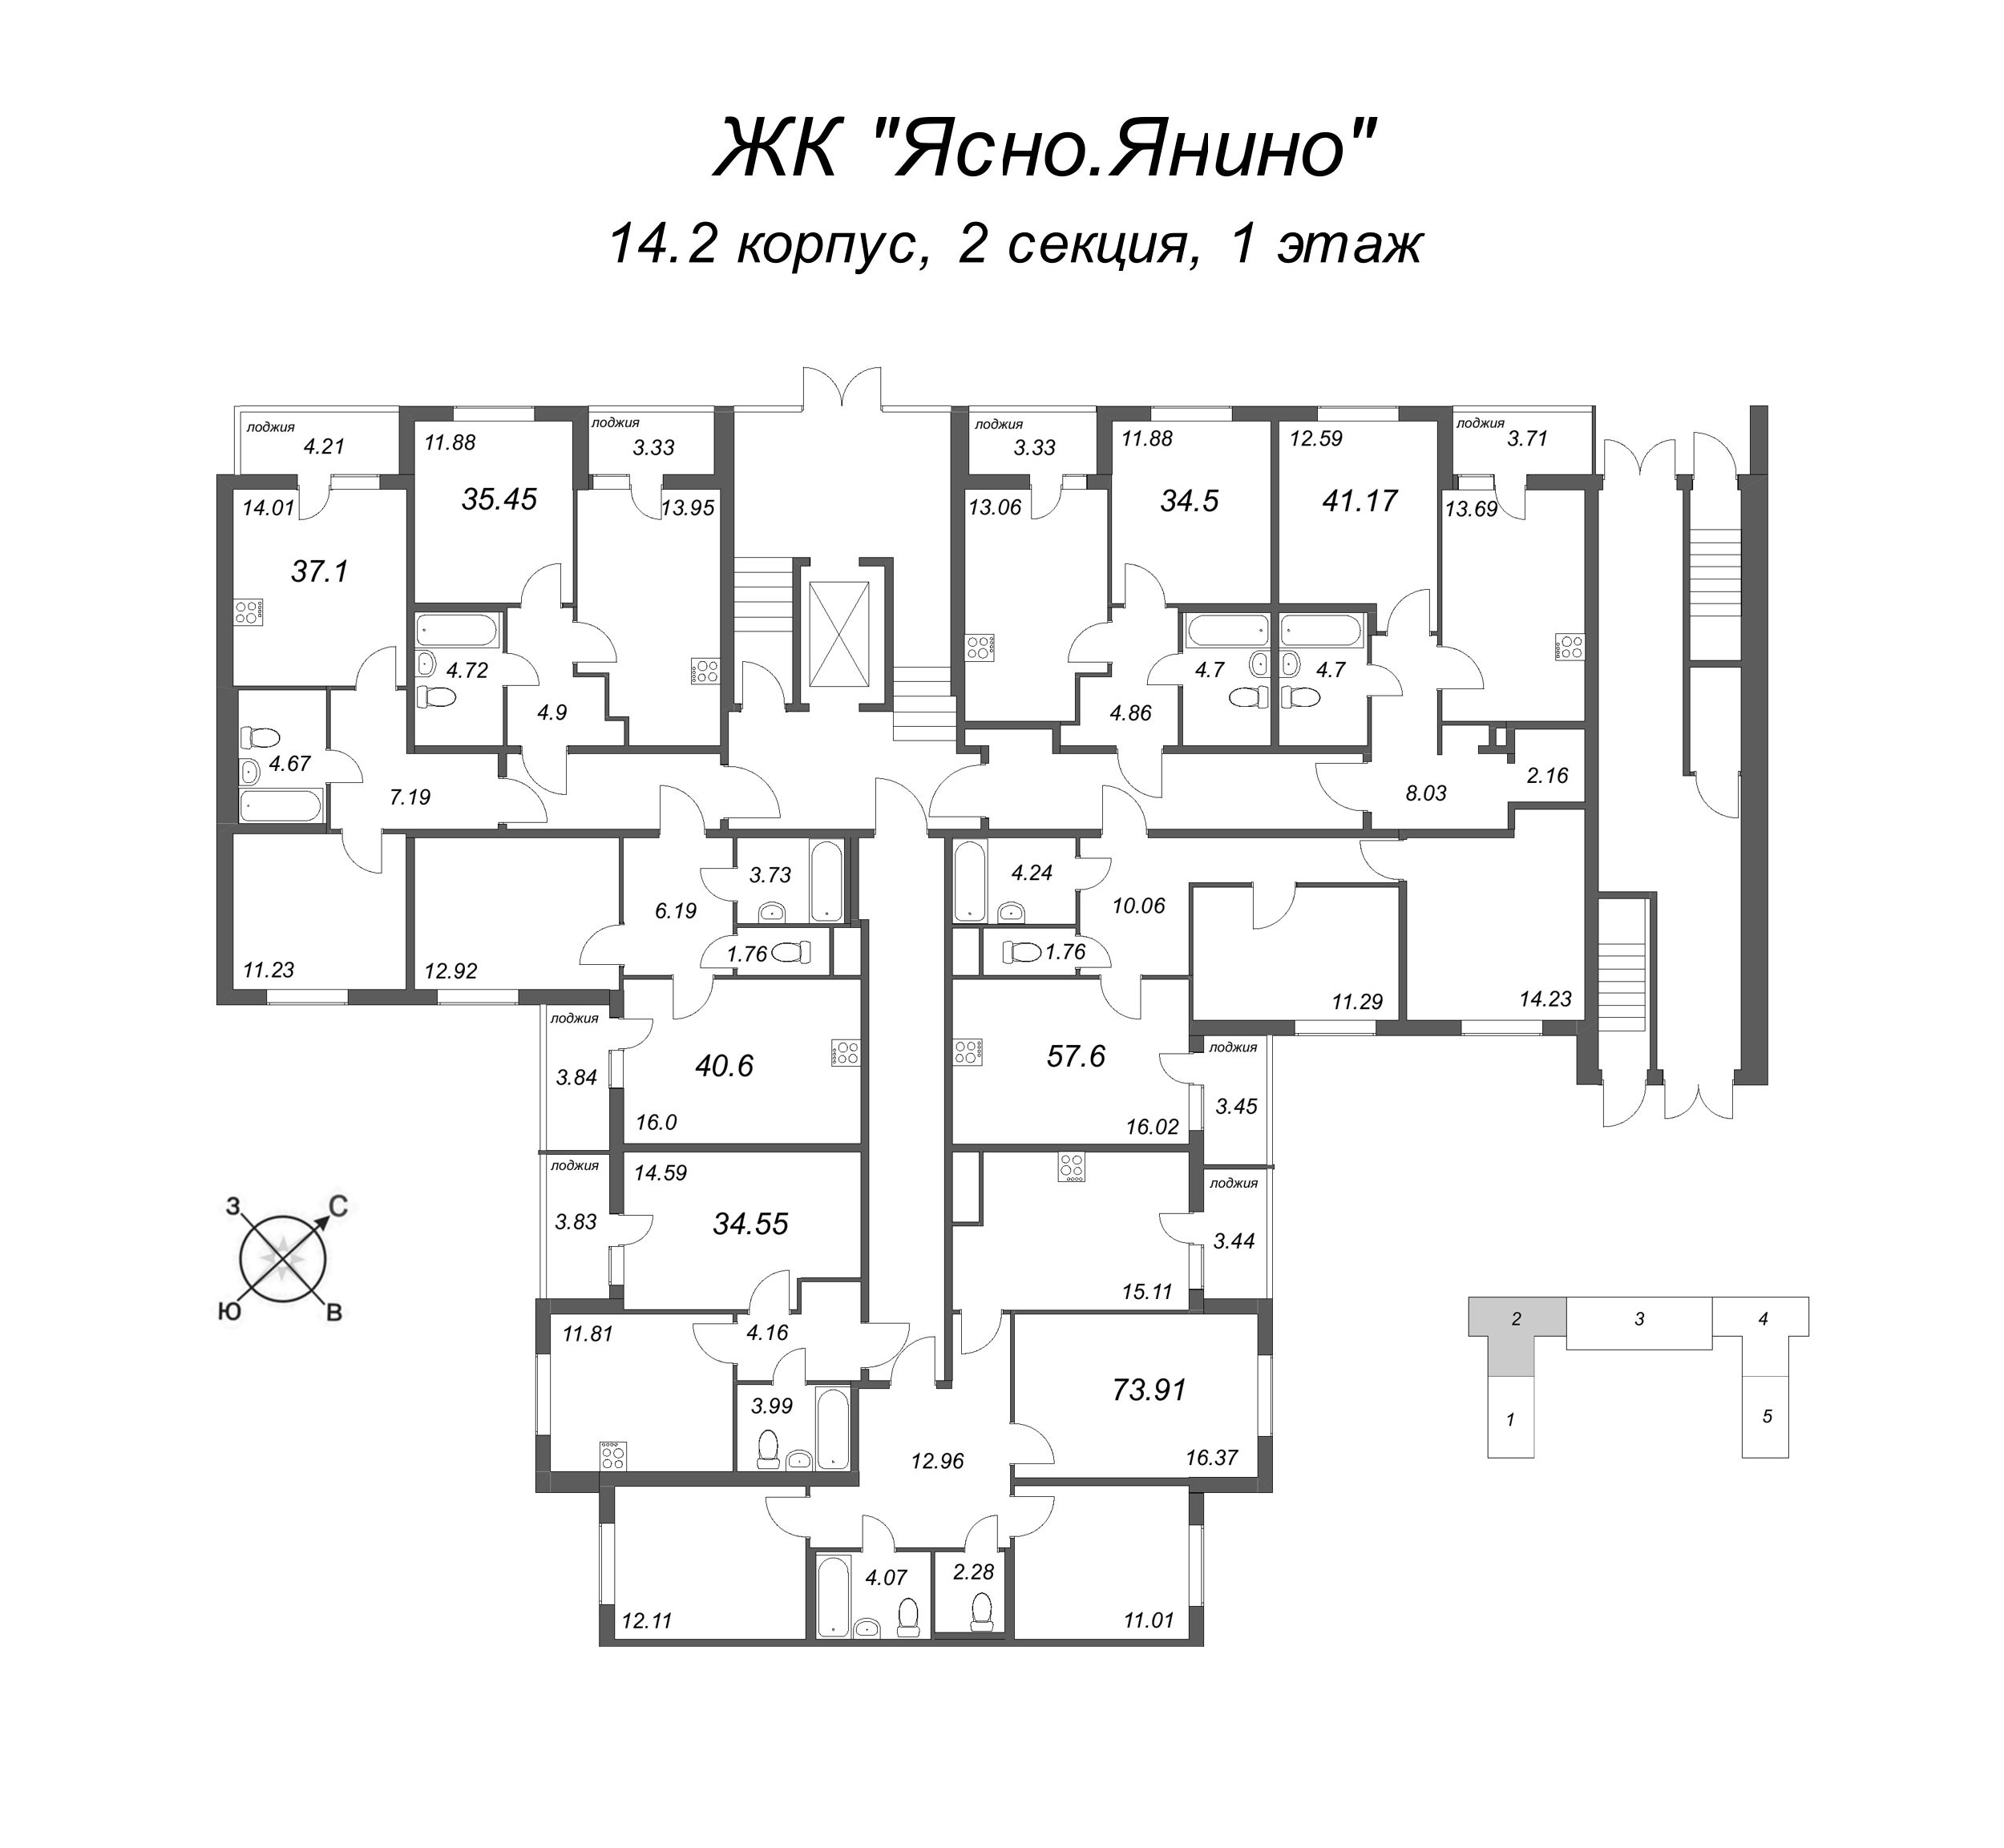 1-комнатная квартира, 34.5 м² в ЖК "Ясно.Янино" - планировка этажа